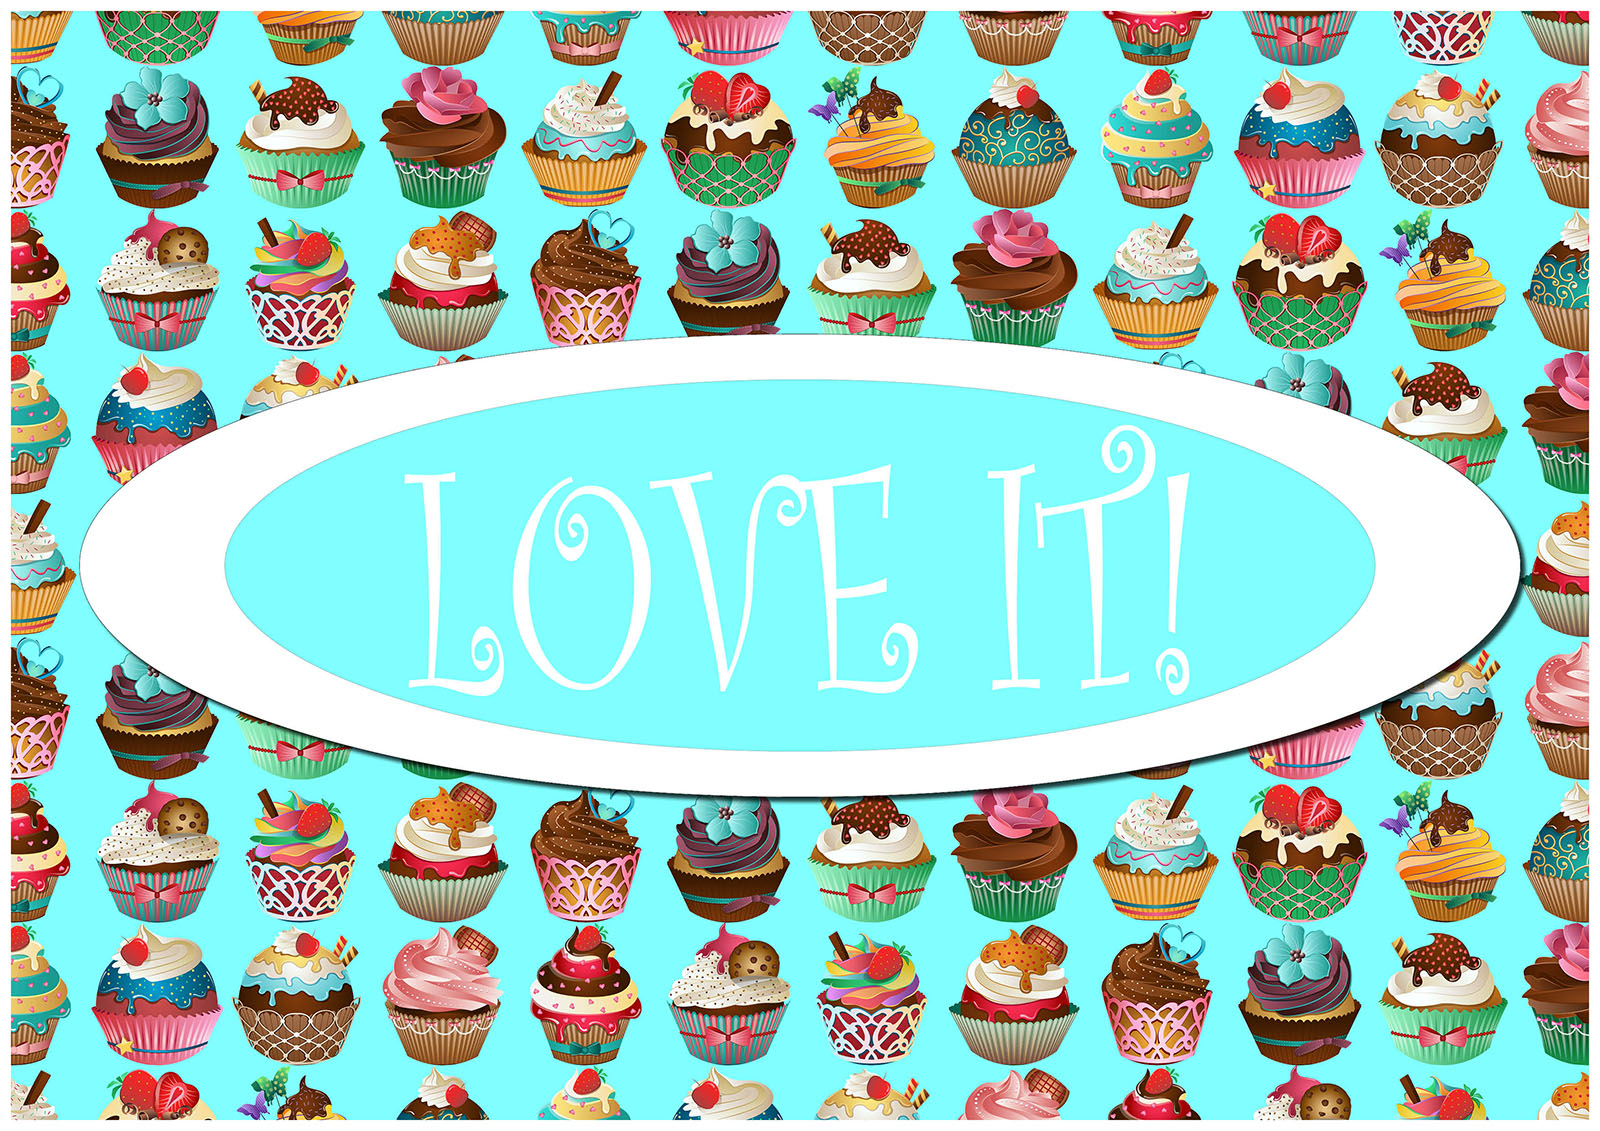 Plakat mit Adobe InDesign (freie Arbeit) - Thema: Cupcake | Join me on Facebook ► http://bit.ly/Btlx-FB